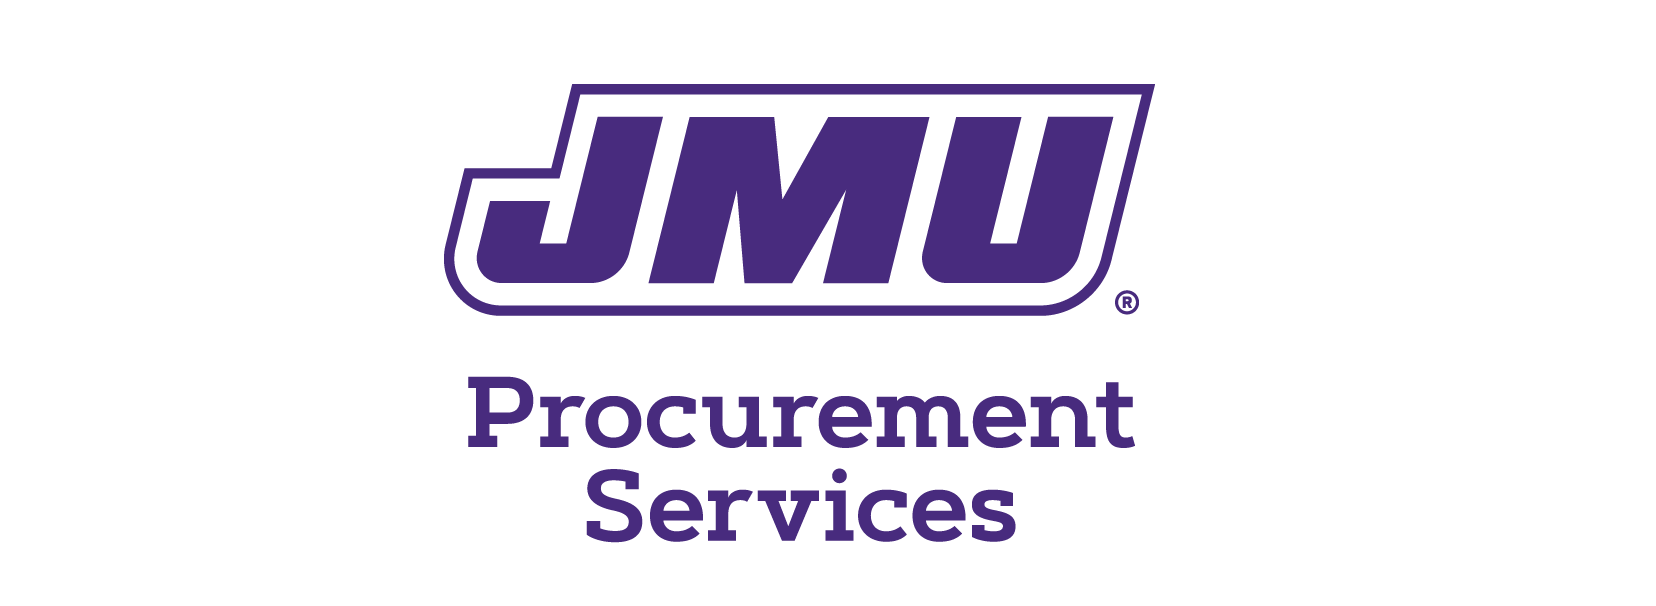 JMU-Procurement Services-vert-purple